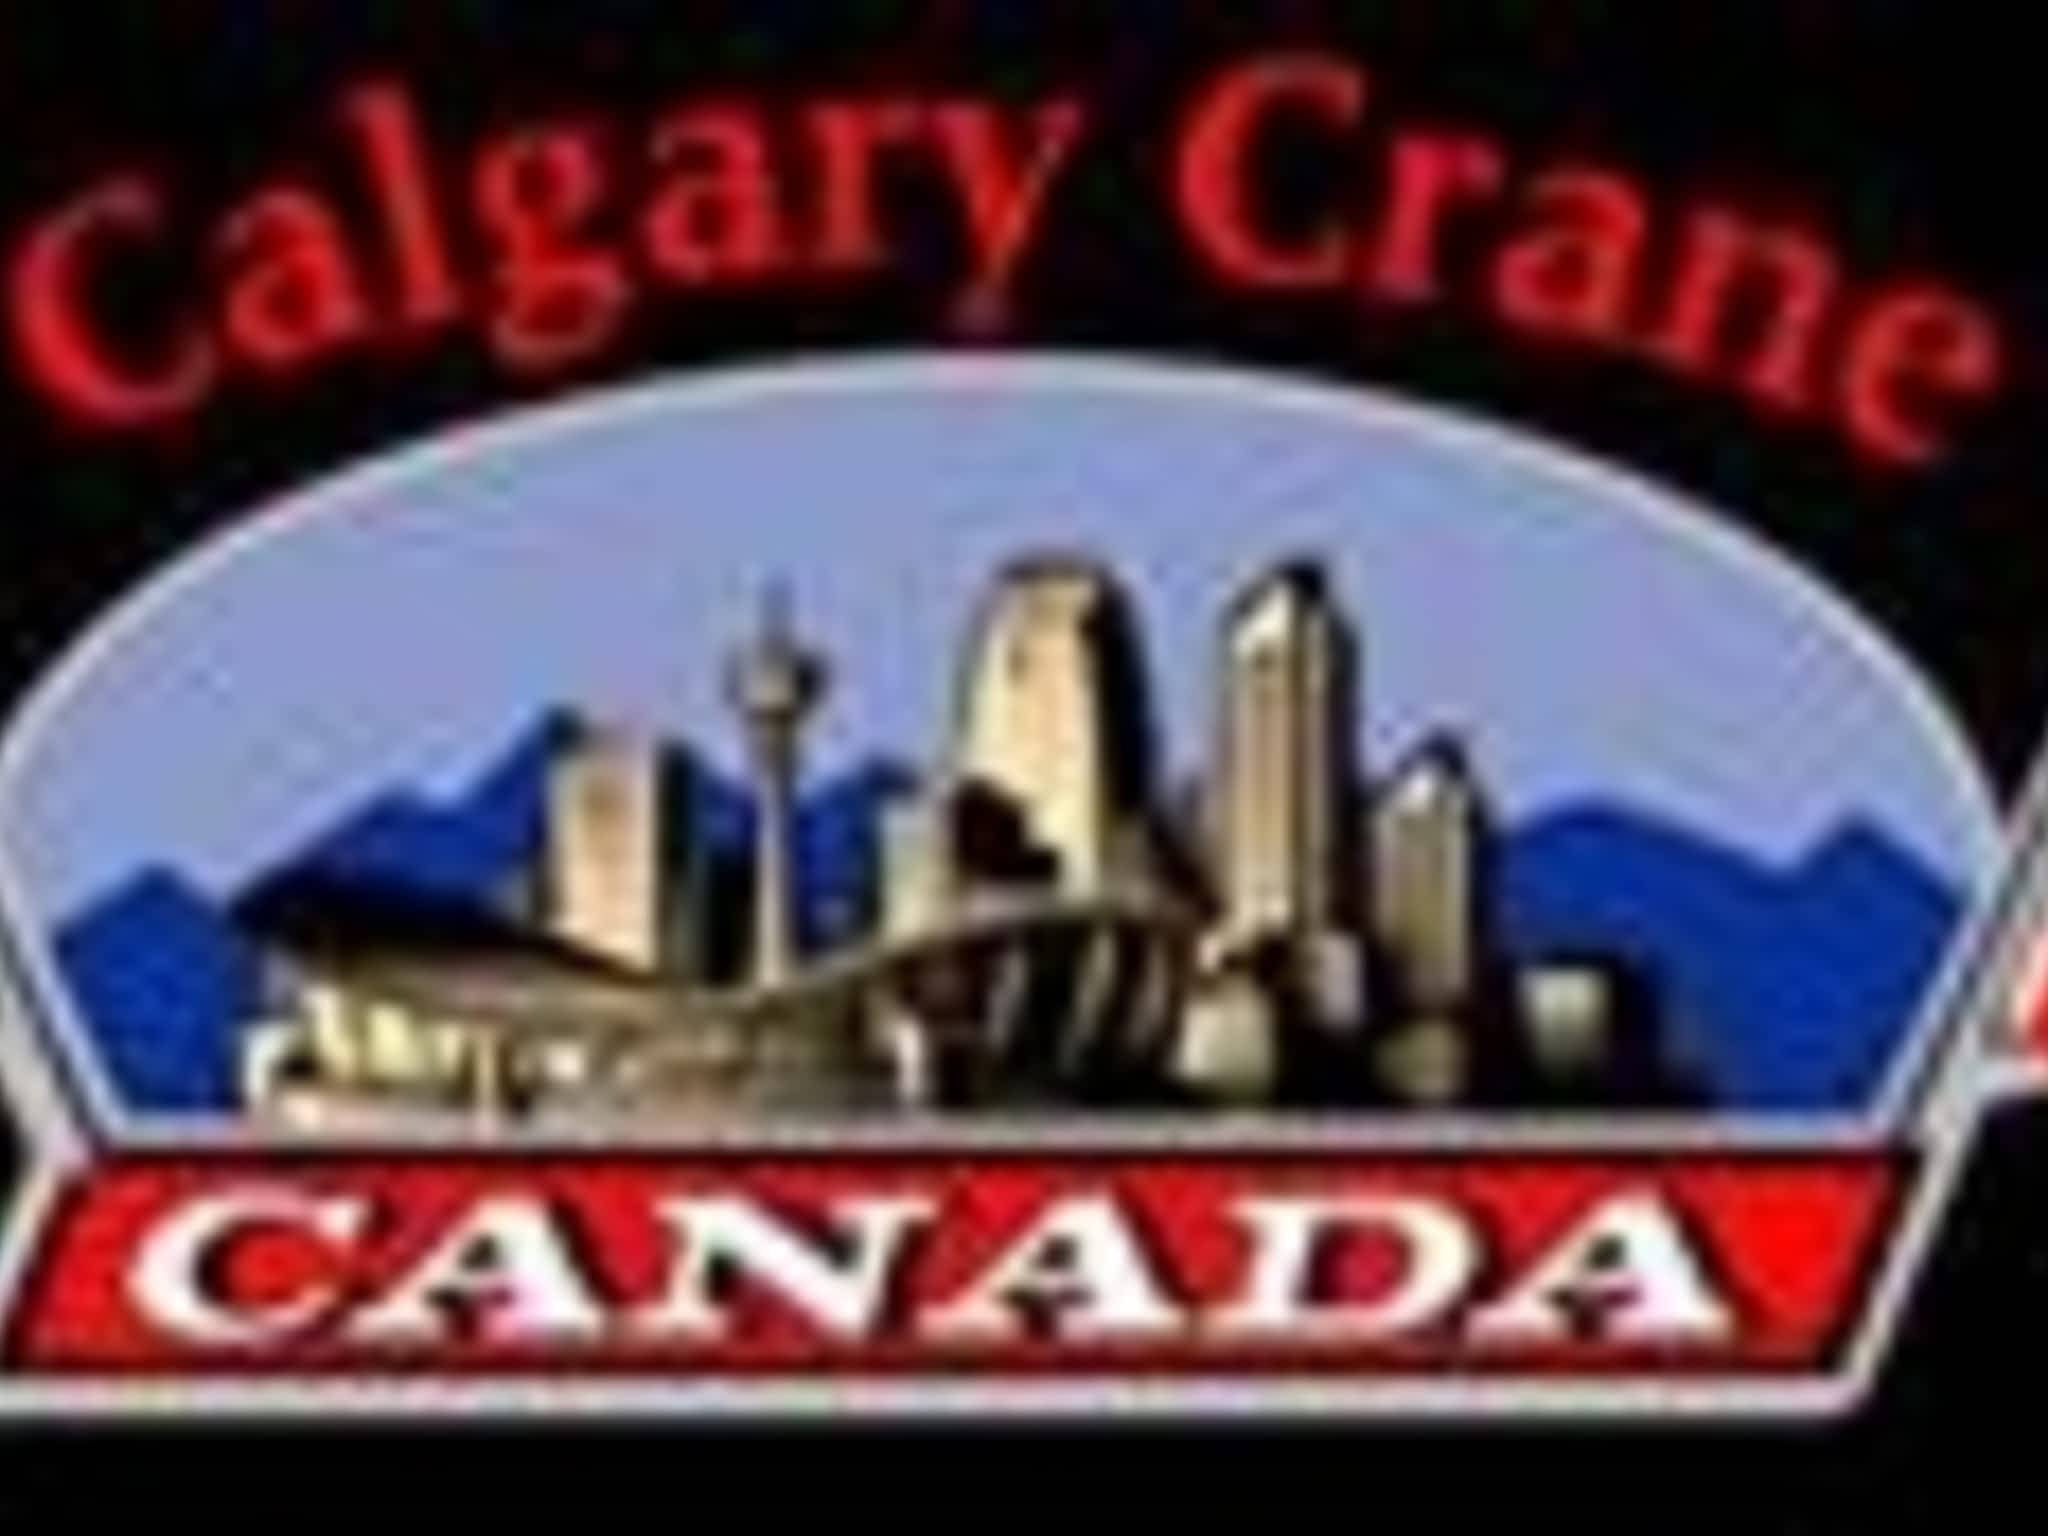 photo Calgary Crane Services Ltd